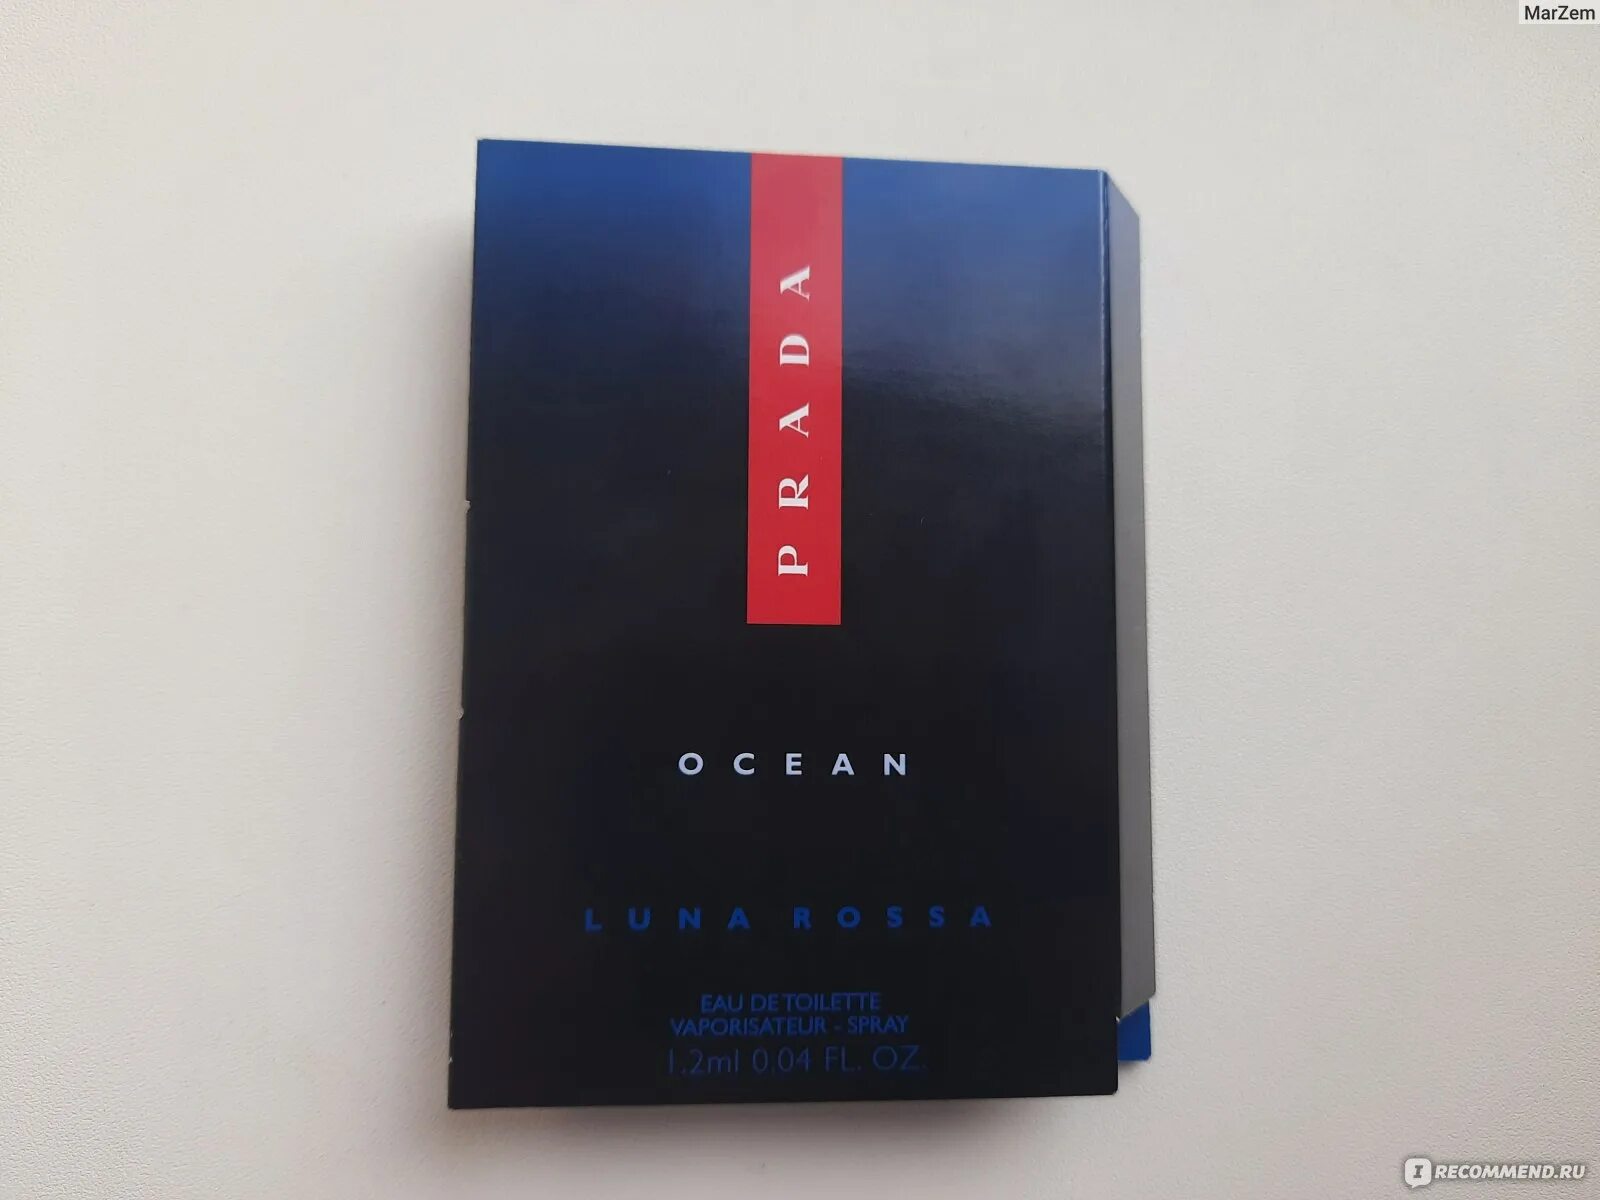 Prada Luna Rossa Ocean. Прада Луна Росса океан. Мужской аромат Прада Луна Росса Ошен. Прада Luna Ocean.